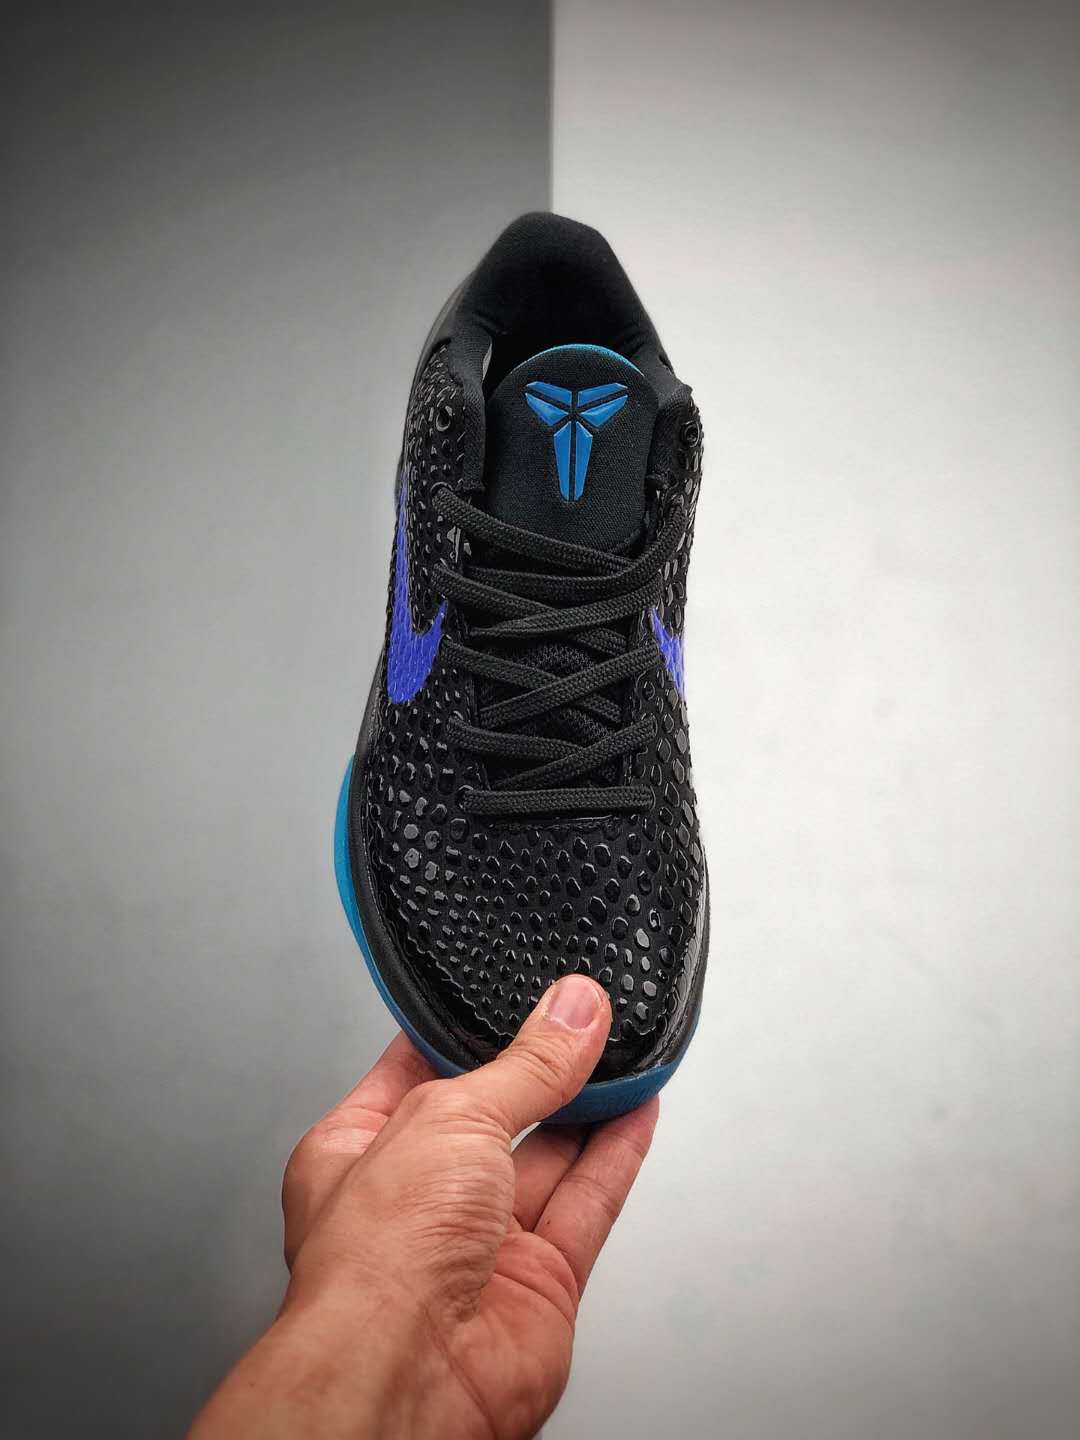 Nike Zoom Kobe 6 VI Blue Purple Black Basketball Shoes 436311-031 - Premium Performance for Athletes